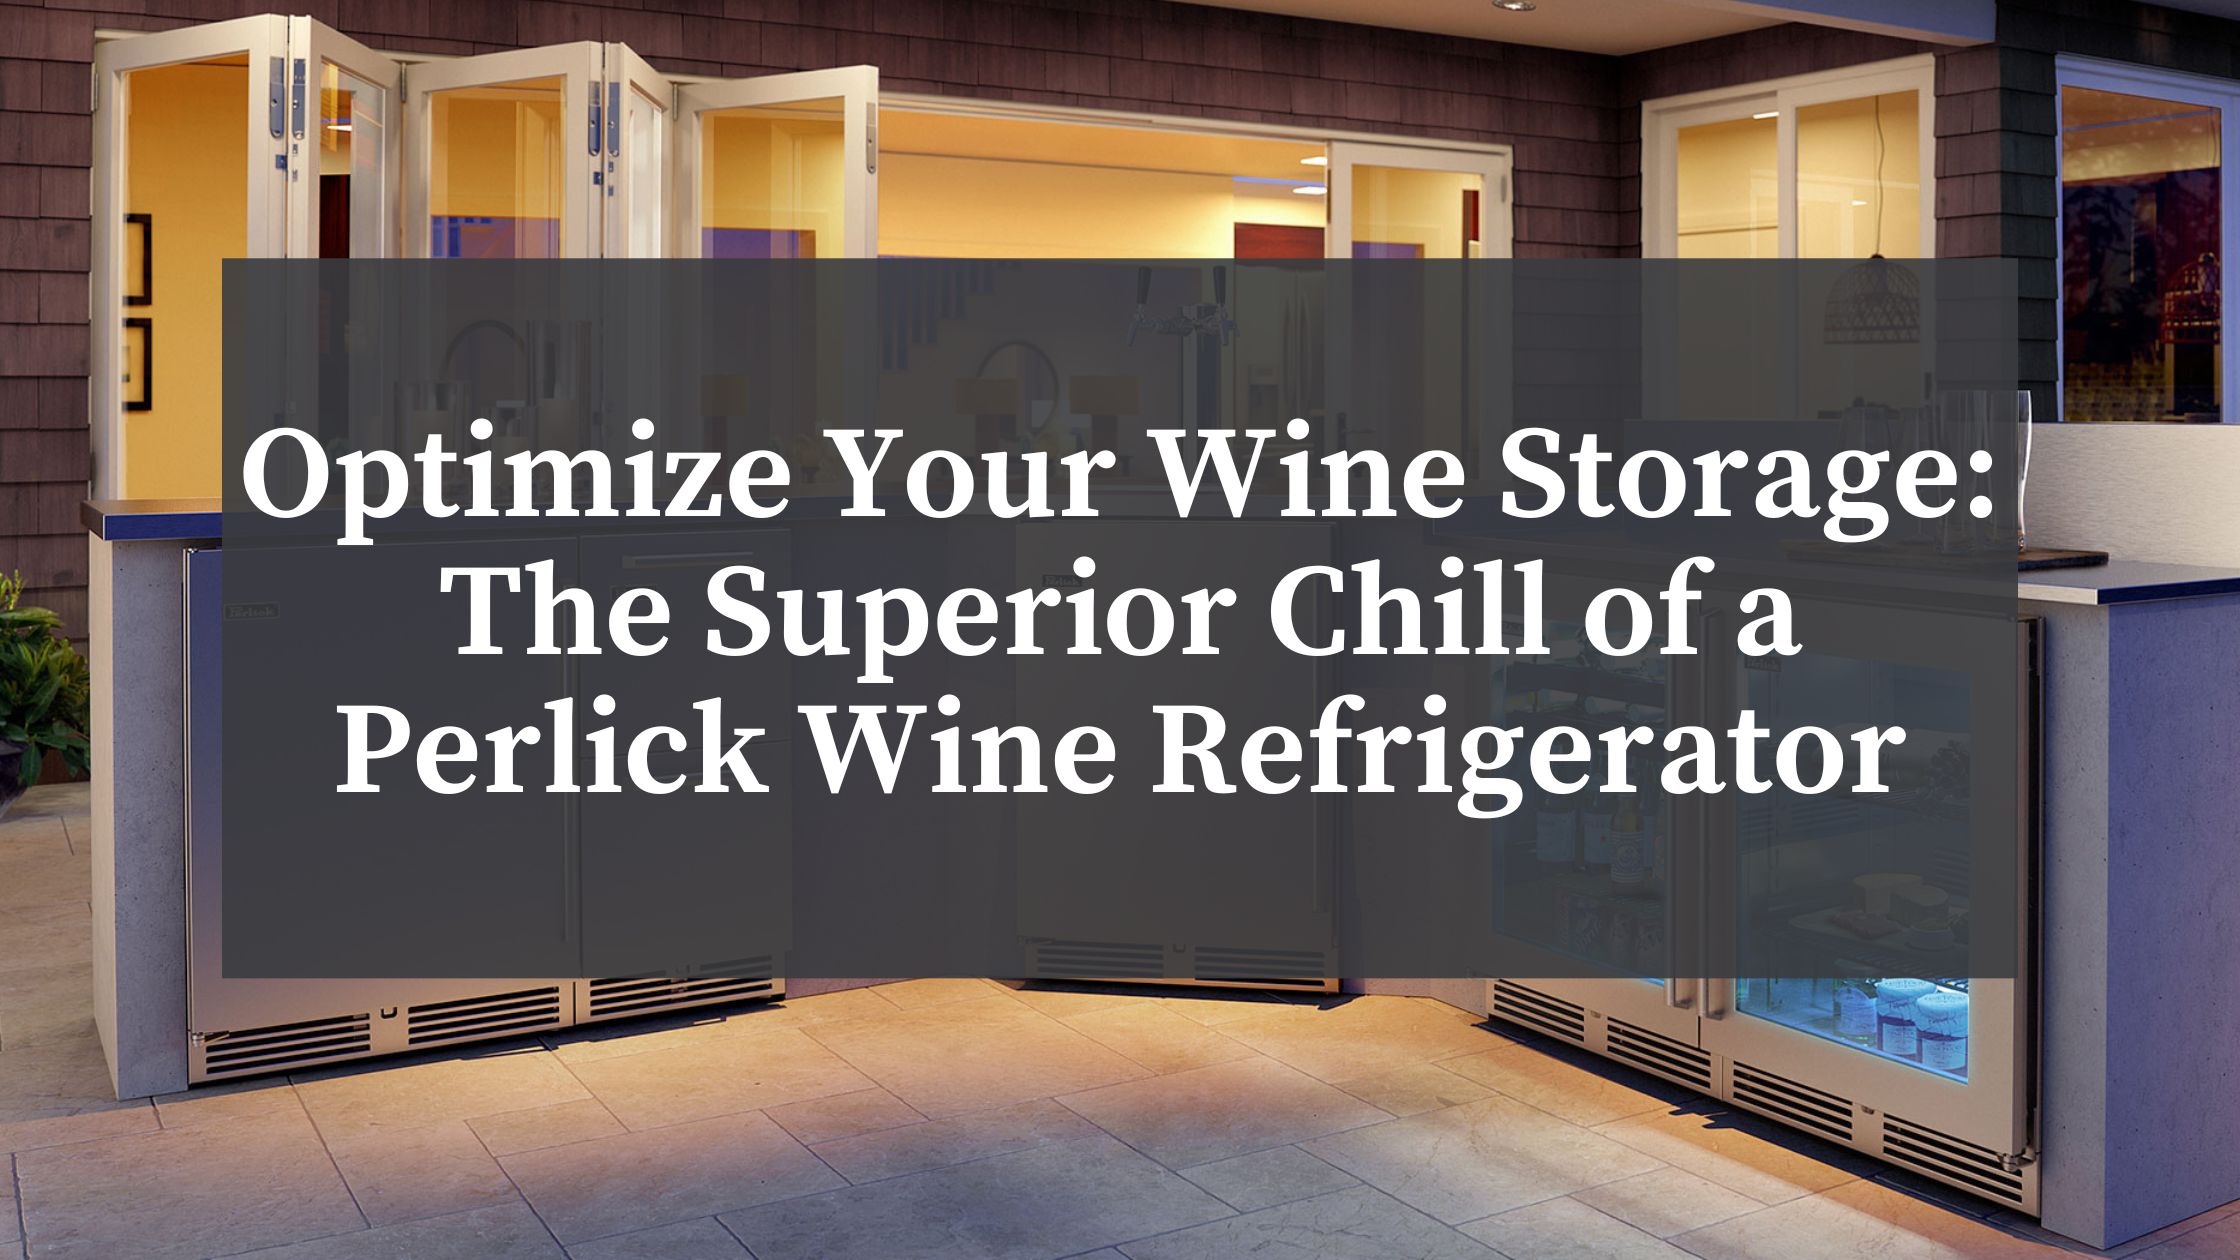 perlick wine refrigerator in home kitchen space for wine collection wine column care for wine right temperature